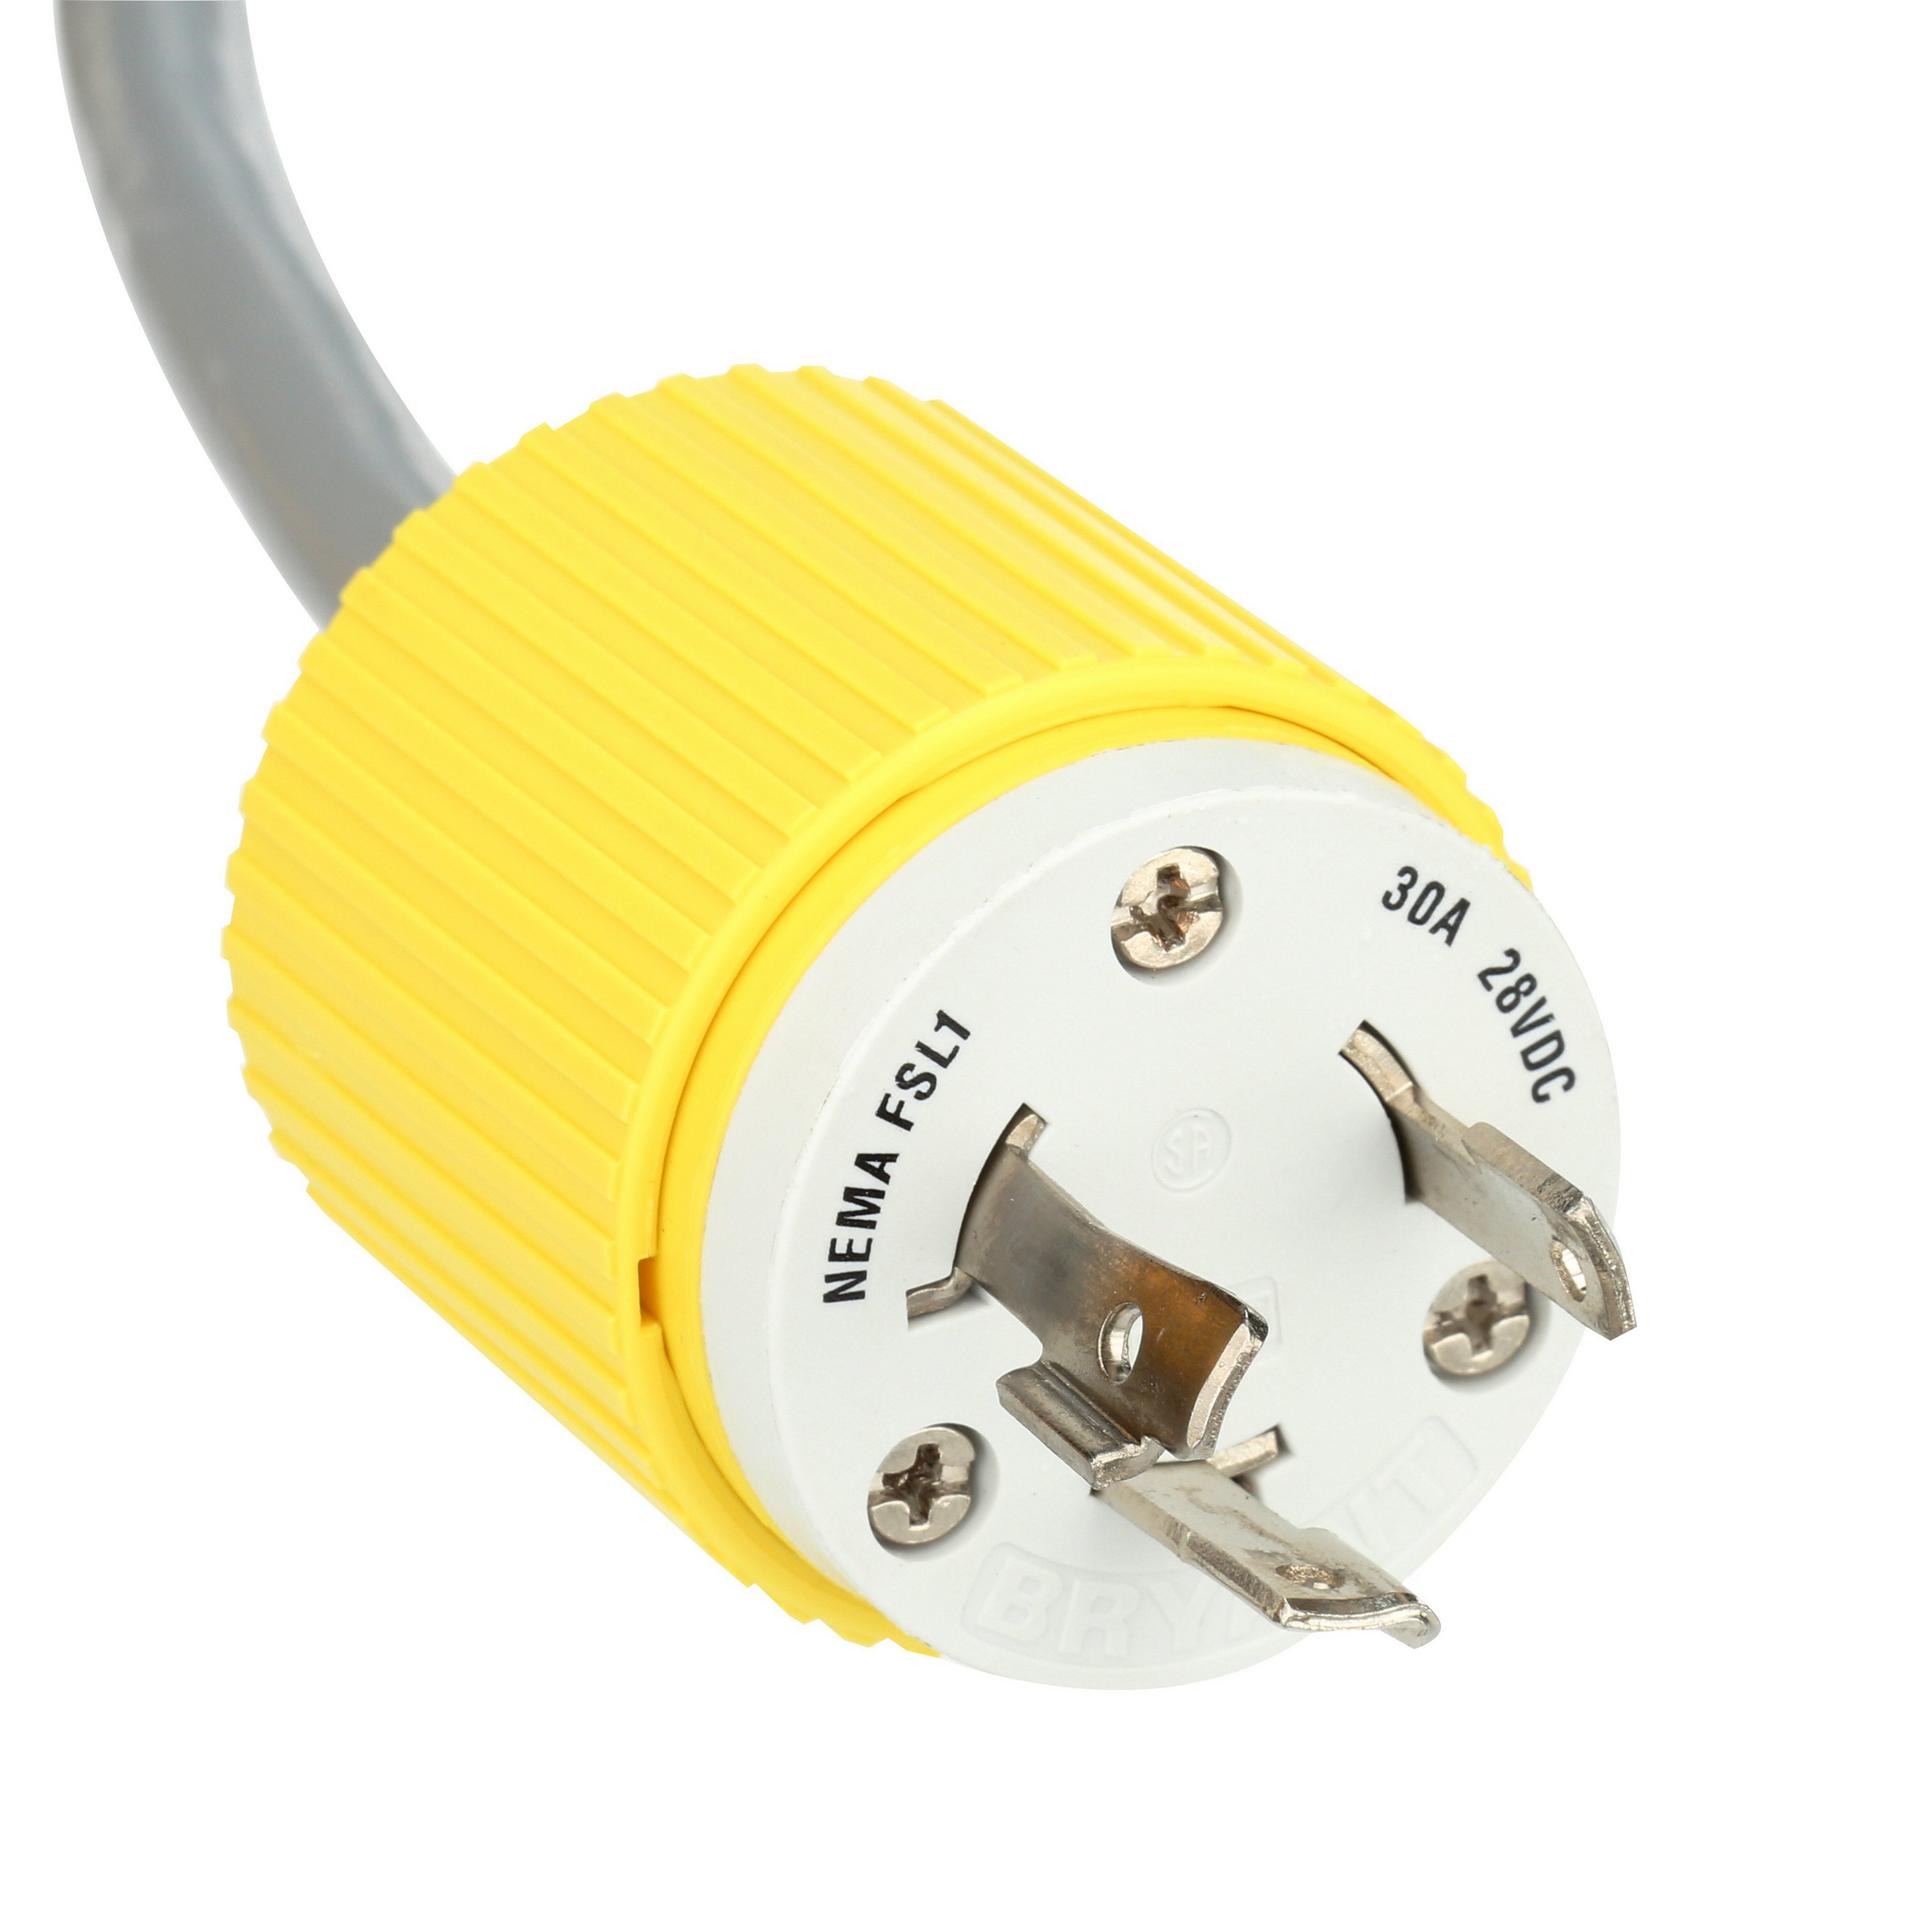 International® VI Detachable Electric Reel